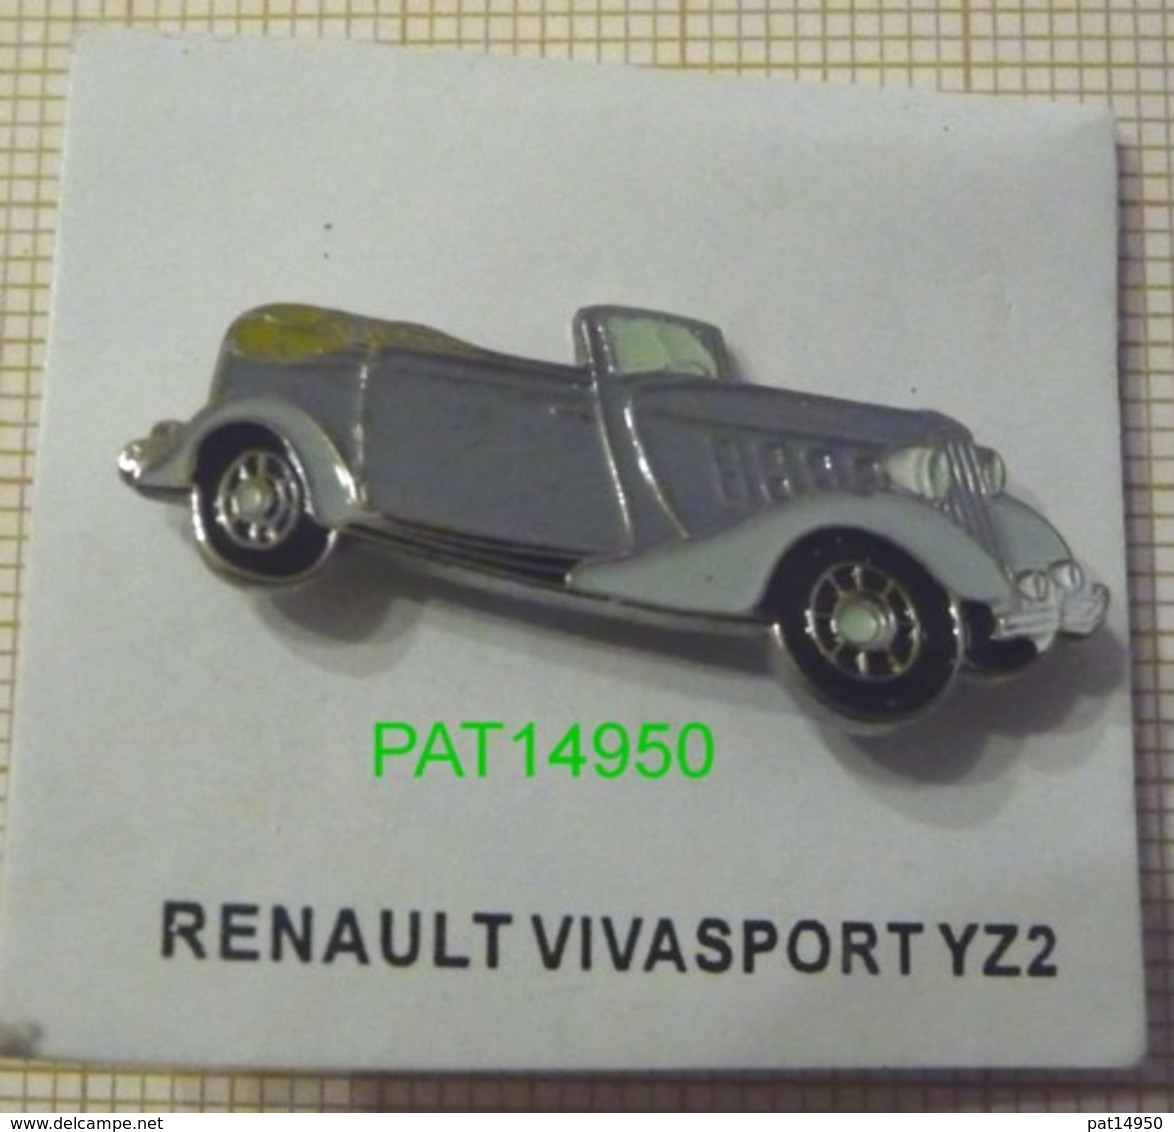 RENAULT VIVASPORT YZ2 - Renault